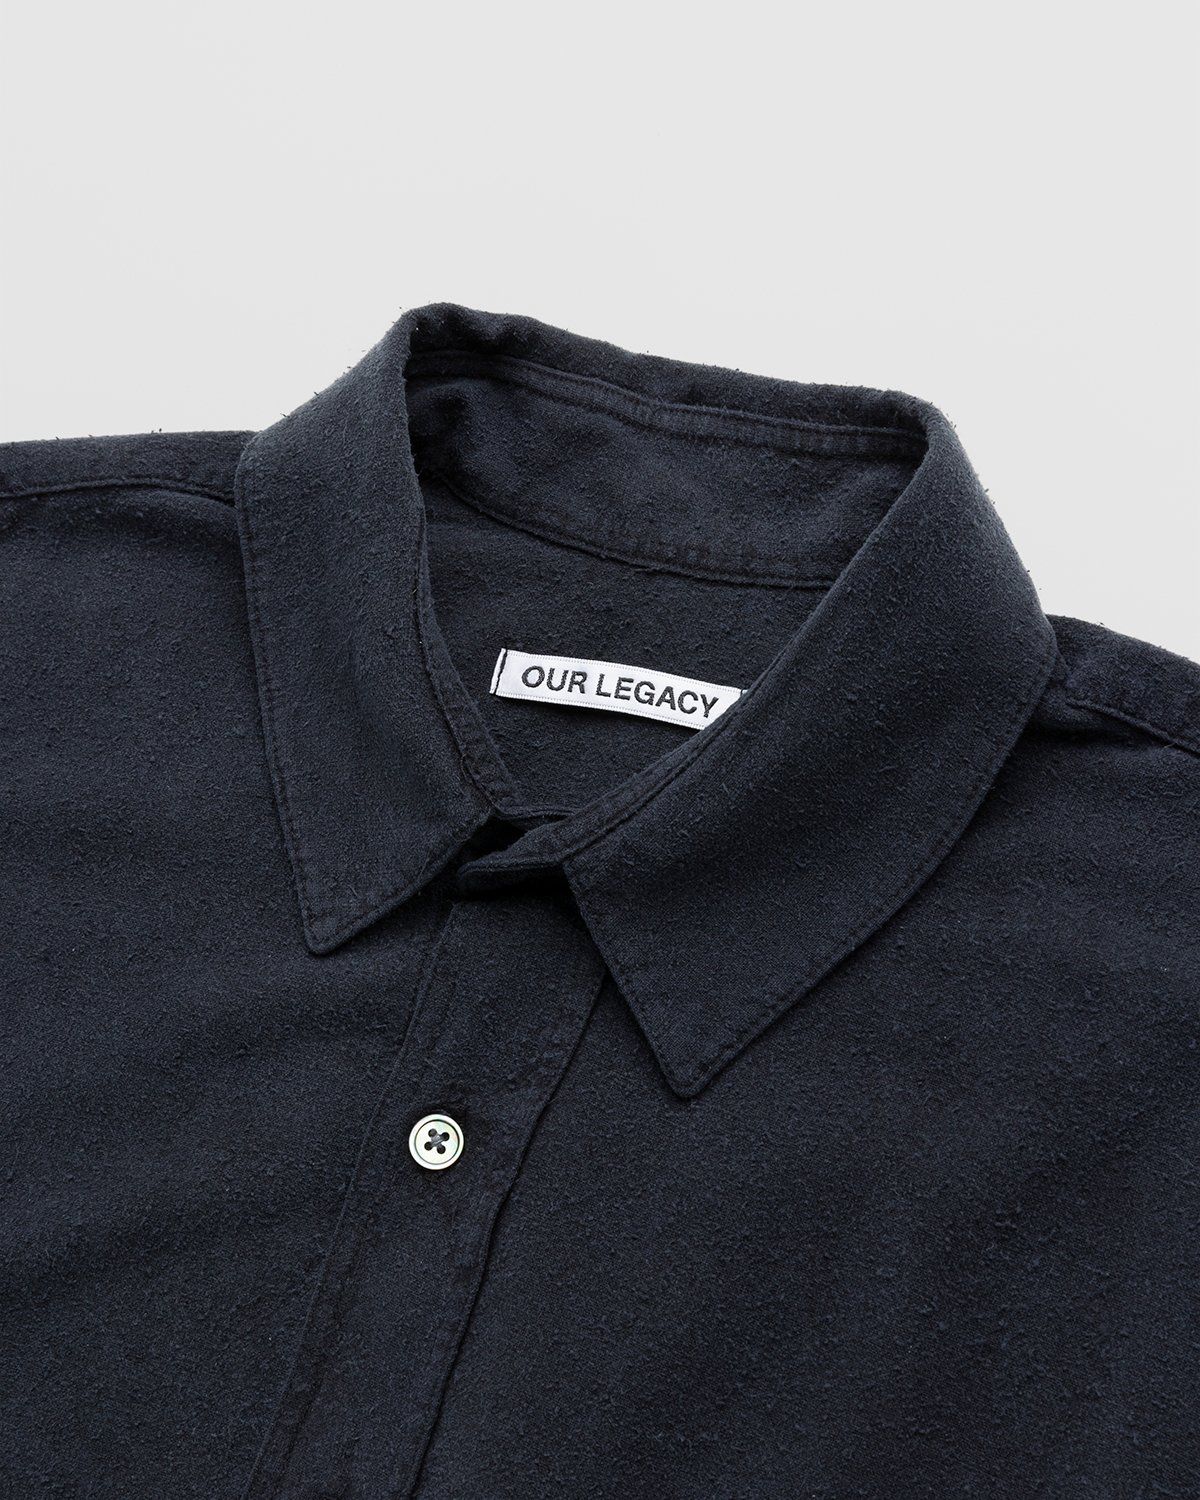 Our Legacy – Classic Shirt Black Silk - Longsleeve Shirts - Black - Image 3